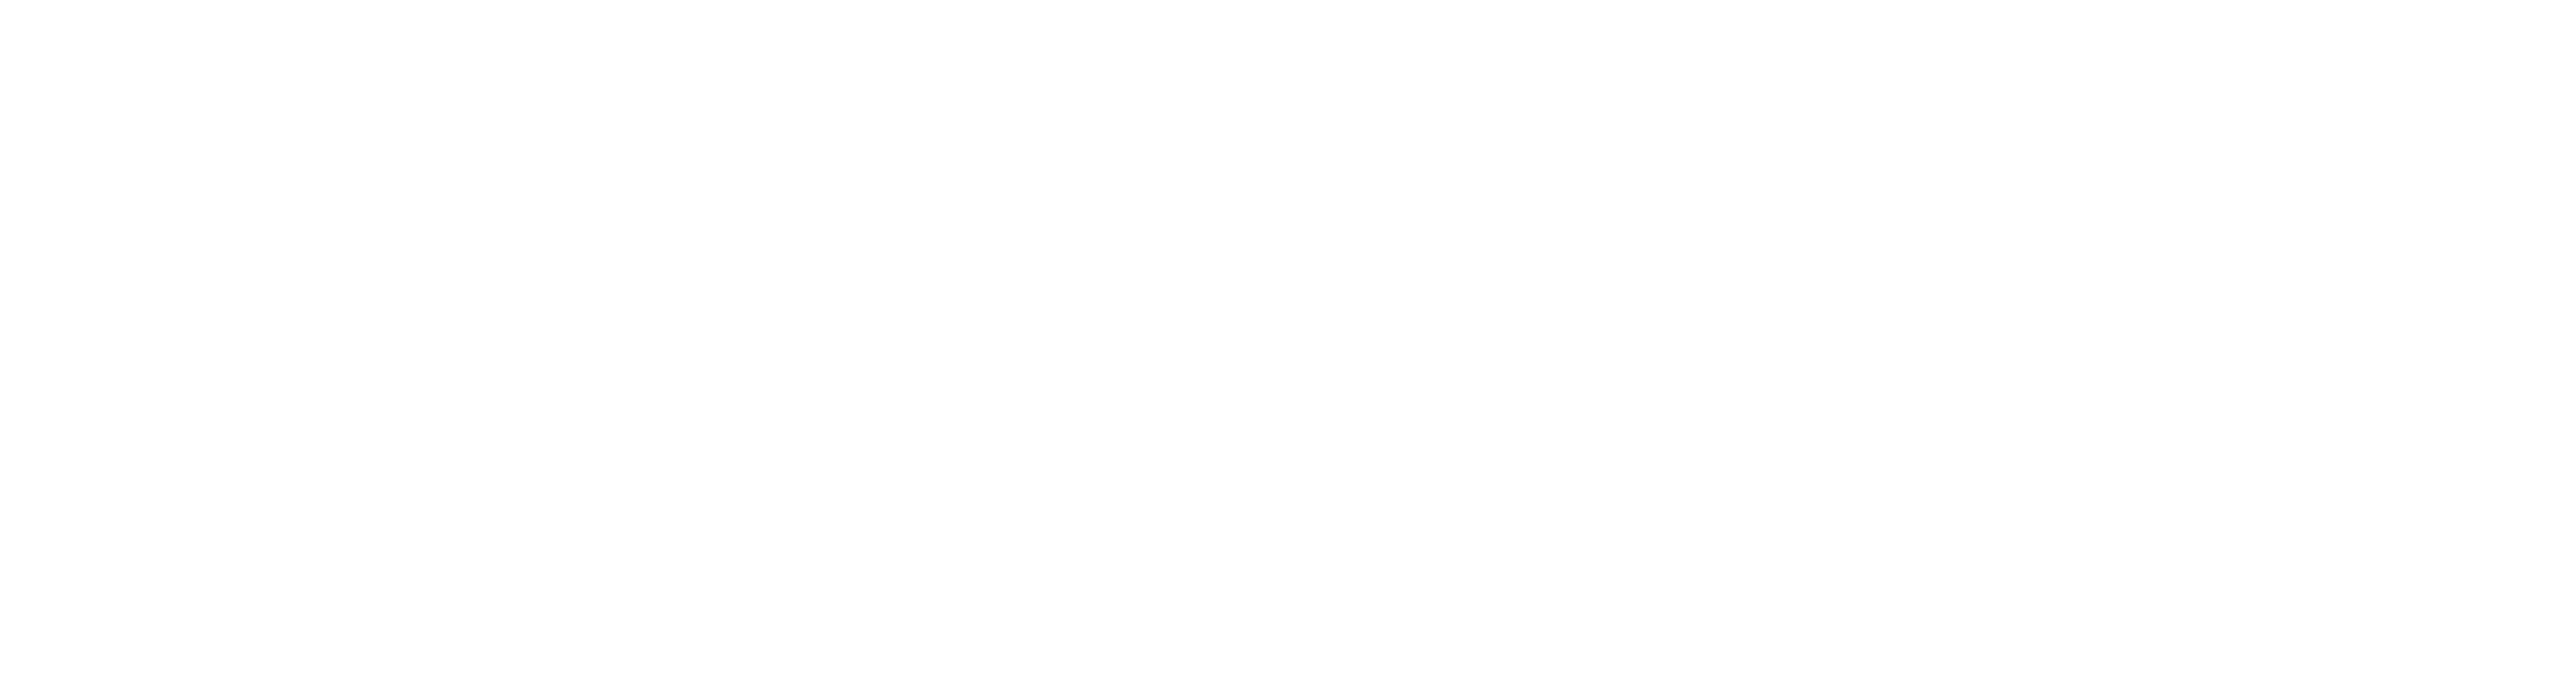 Strymon Deco Logo